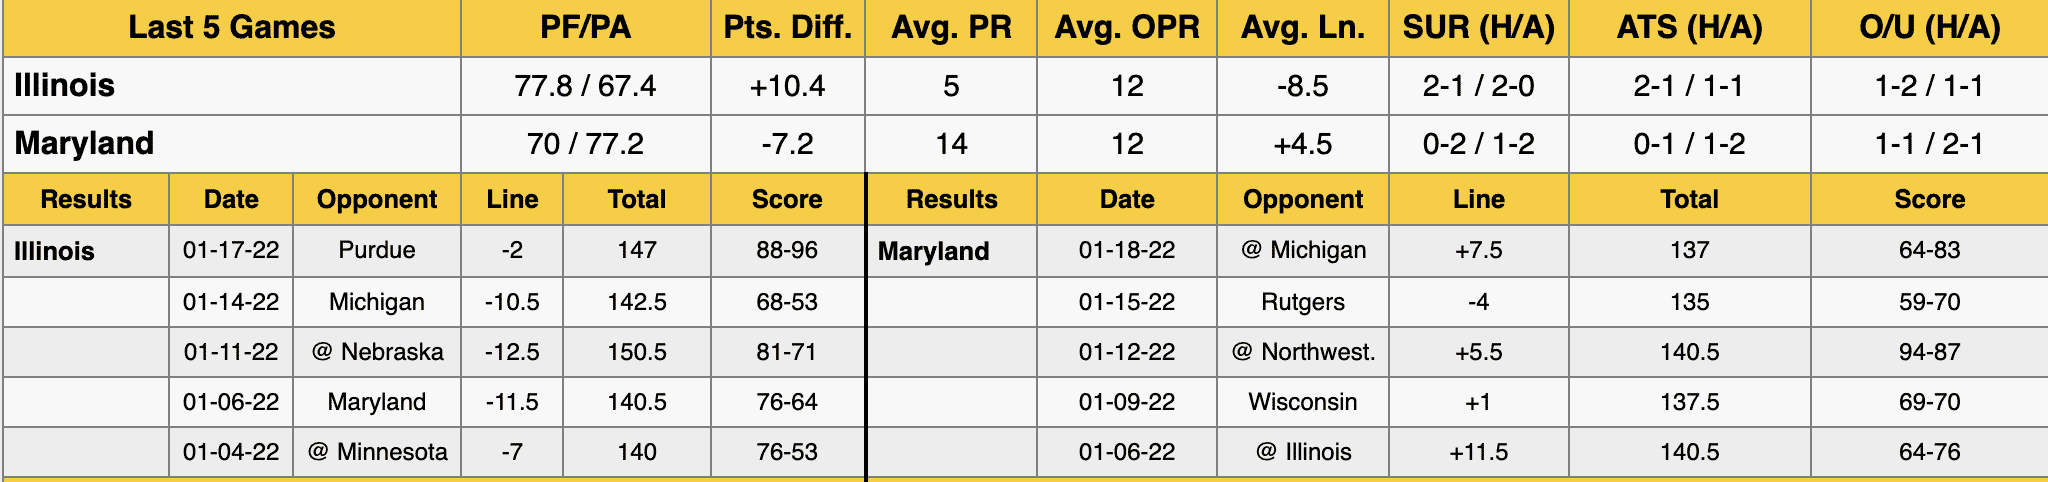 Illinois vs Maryland Stats Jan 21